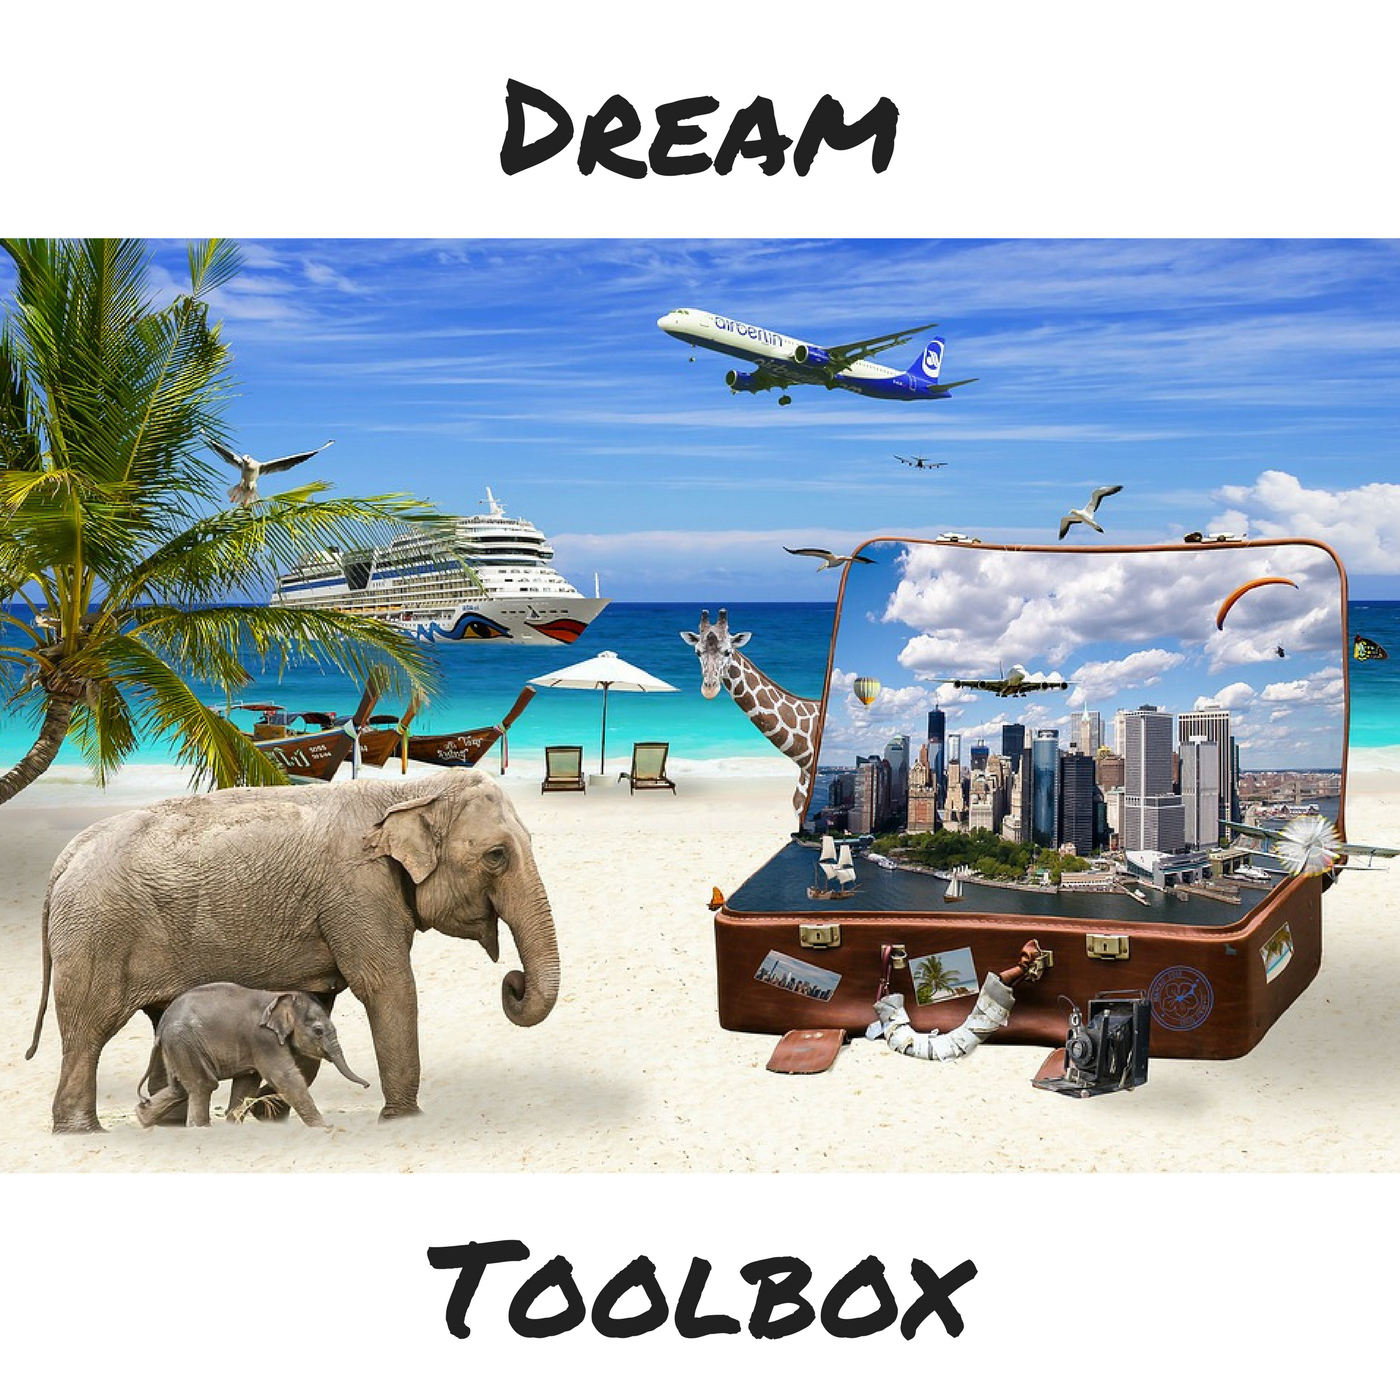 Dream Toolbox